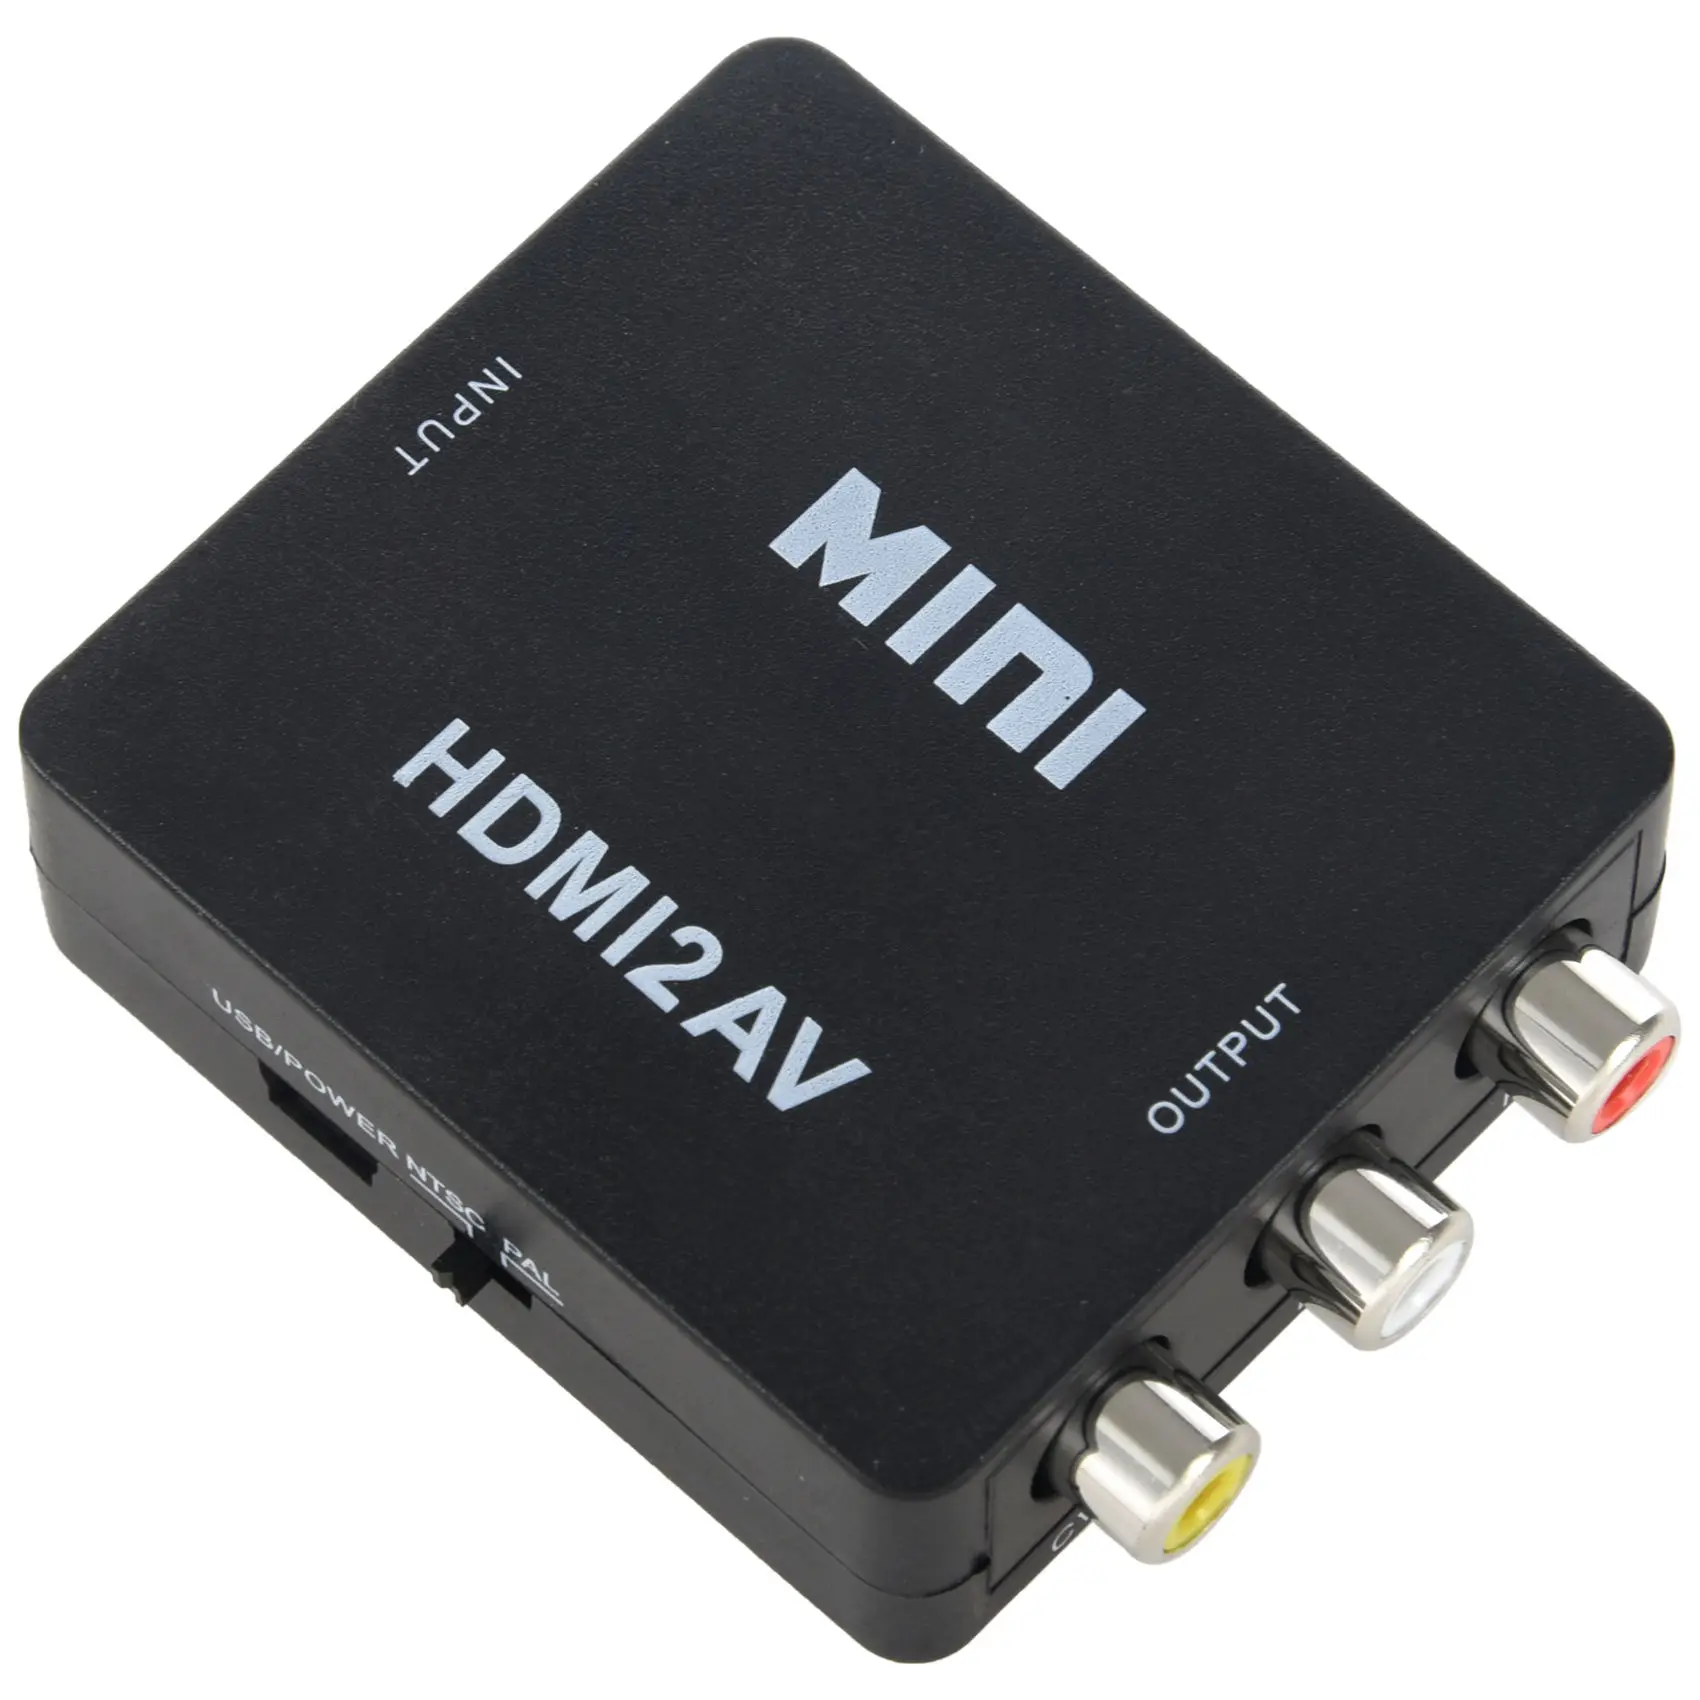 

Мини 1080P HDMI композитный к RCA Аудио Видео AV CVBS конвертер адаптер для HDTV